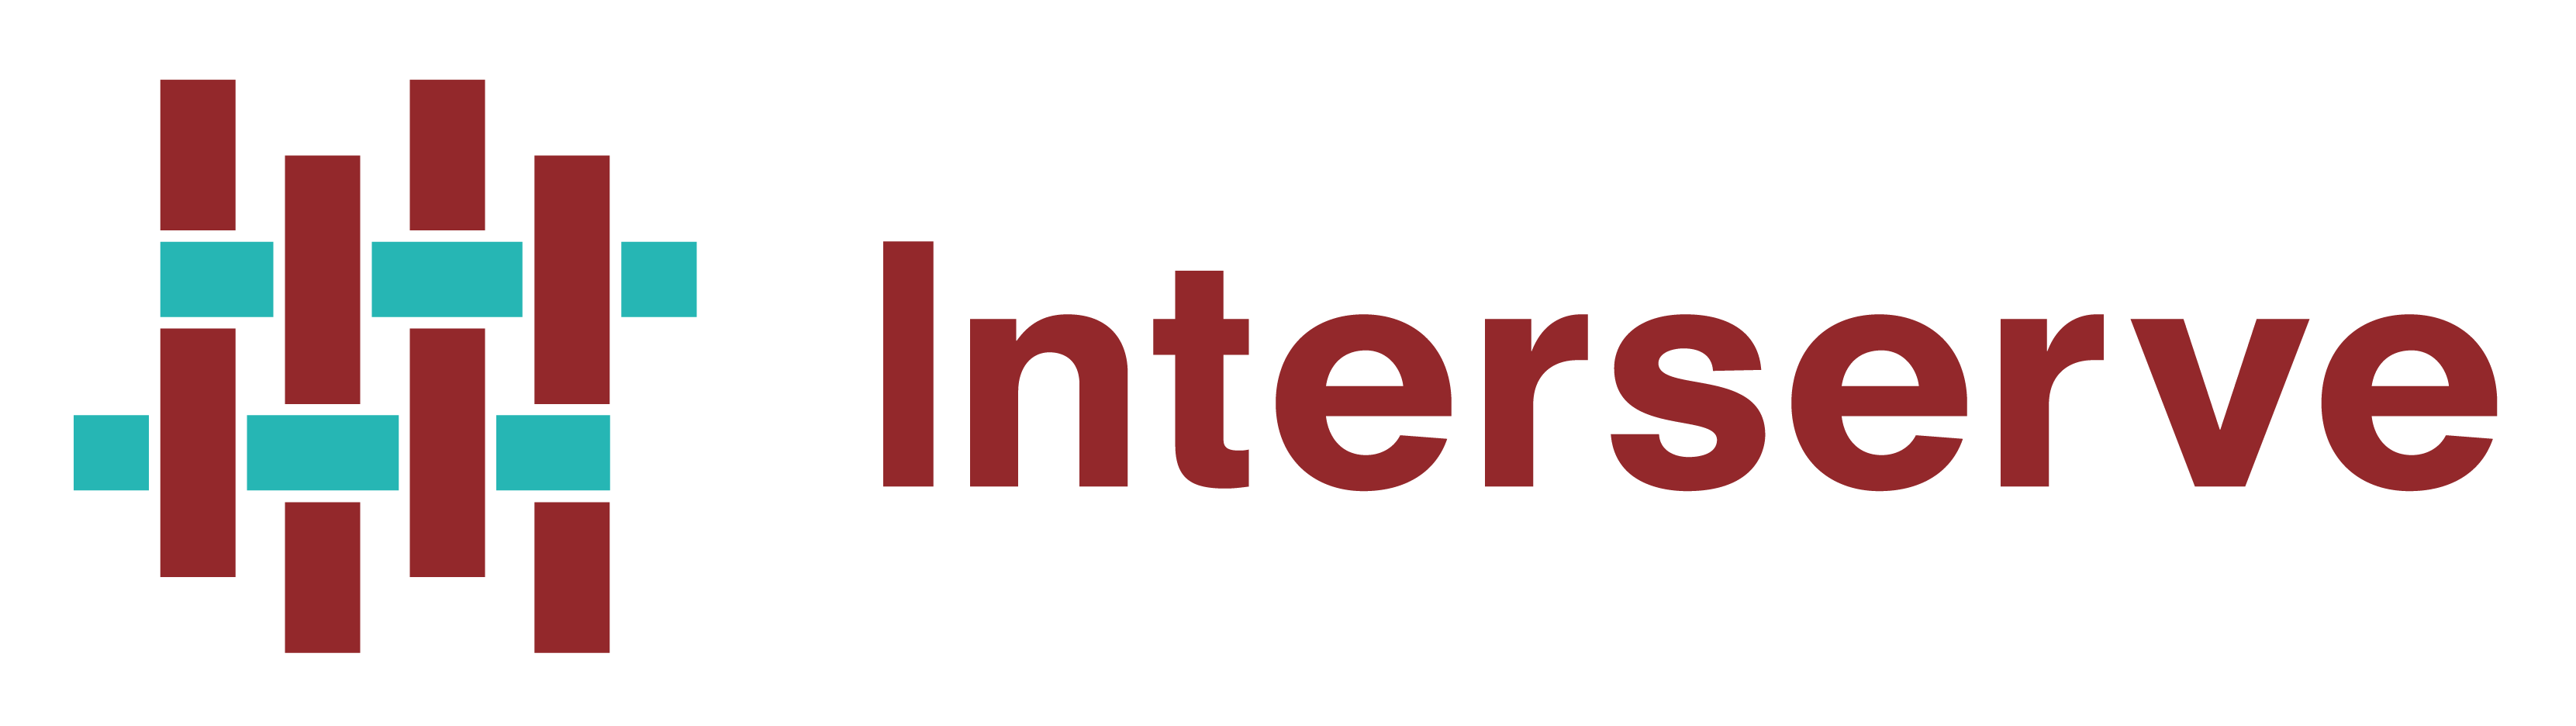 Logo_Interserve_Turquoise